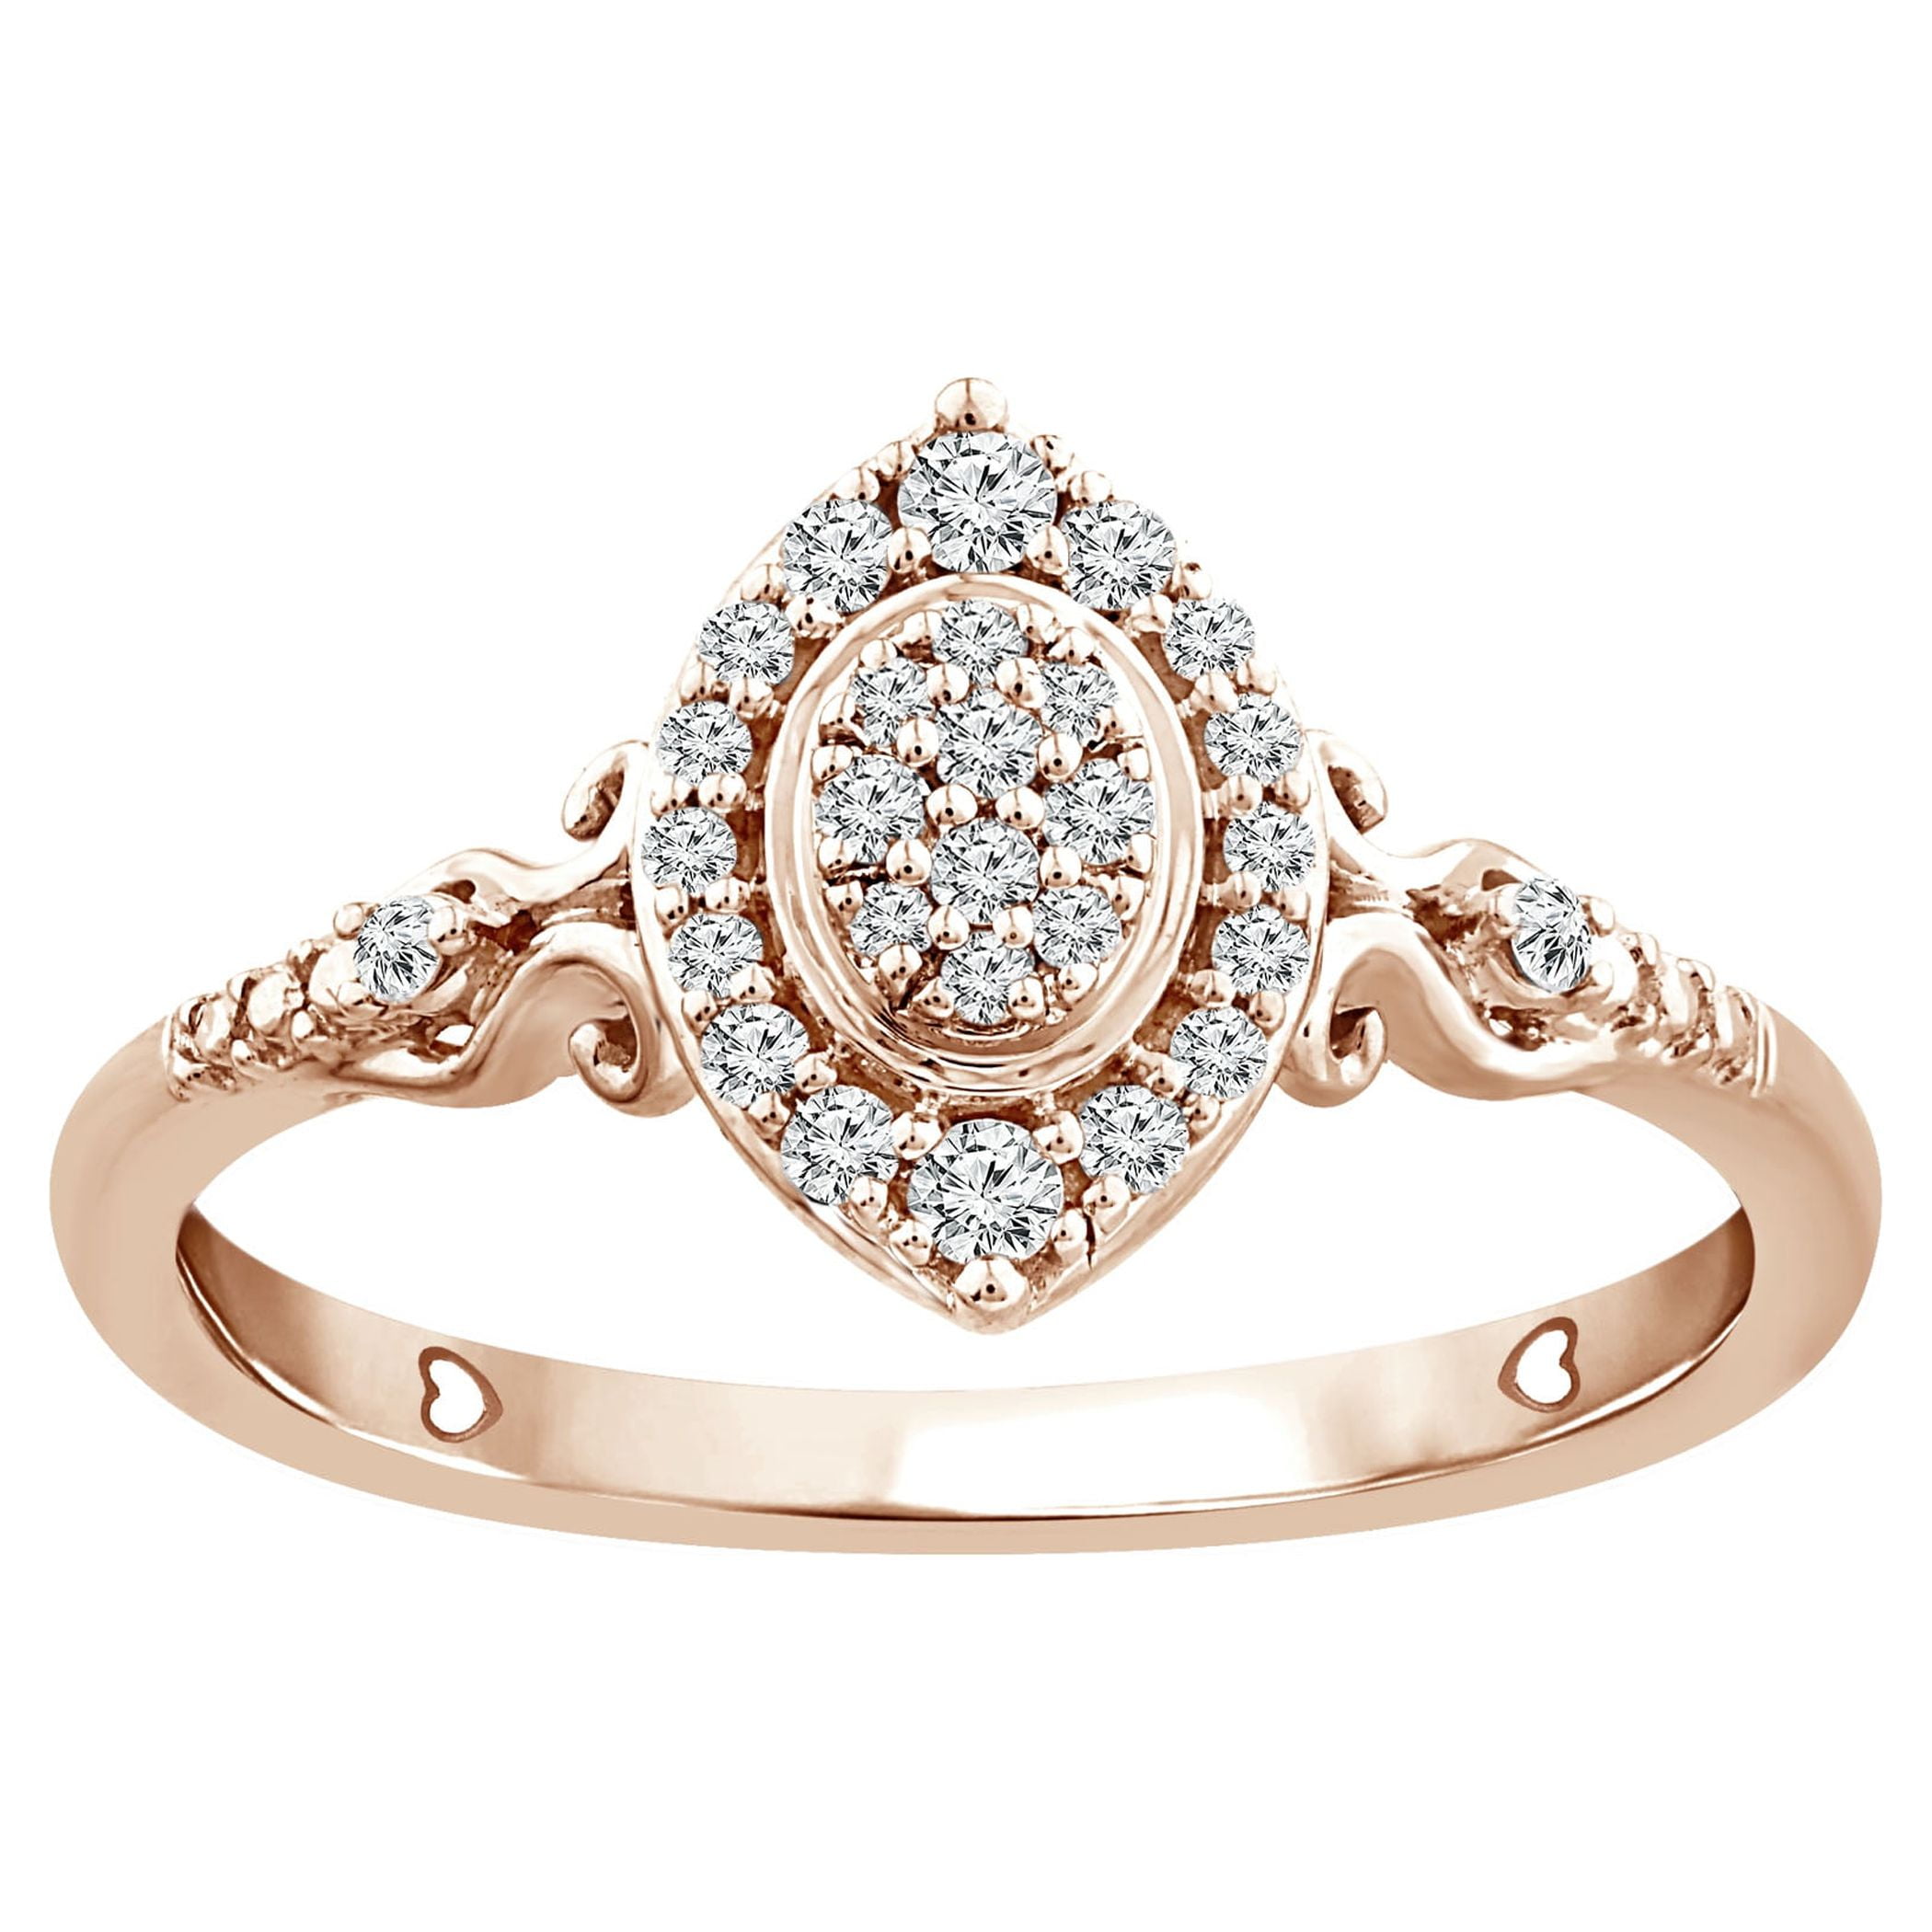 SPHET Couple Rings for Women Men Adjustable Couple Matching Promise  Engagement Wedding Ring Set Friendship Rings Gift Jewelry - Walmart.com